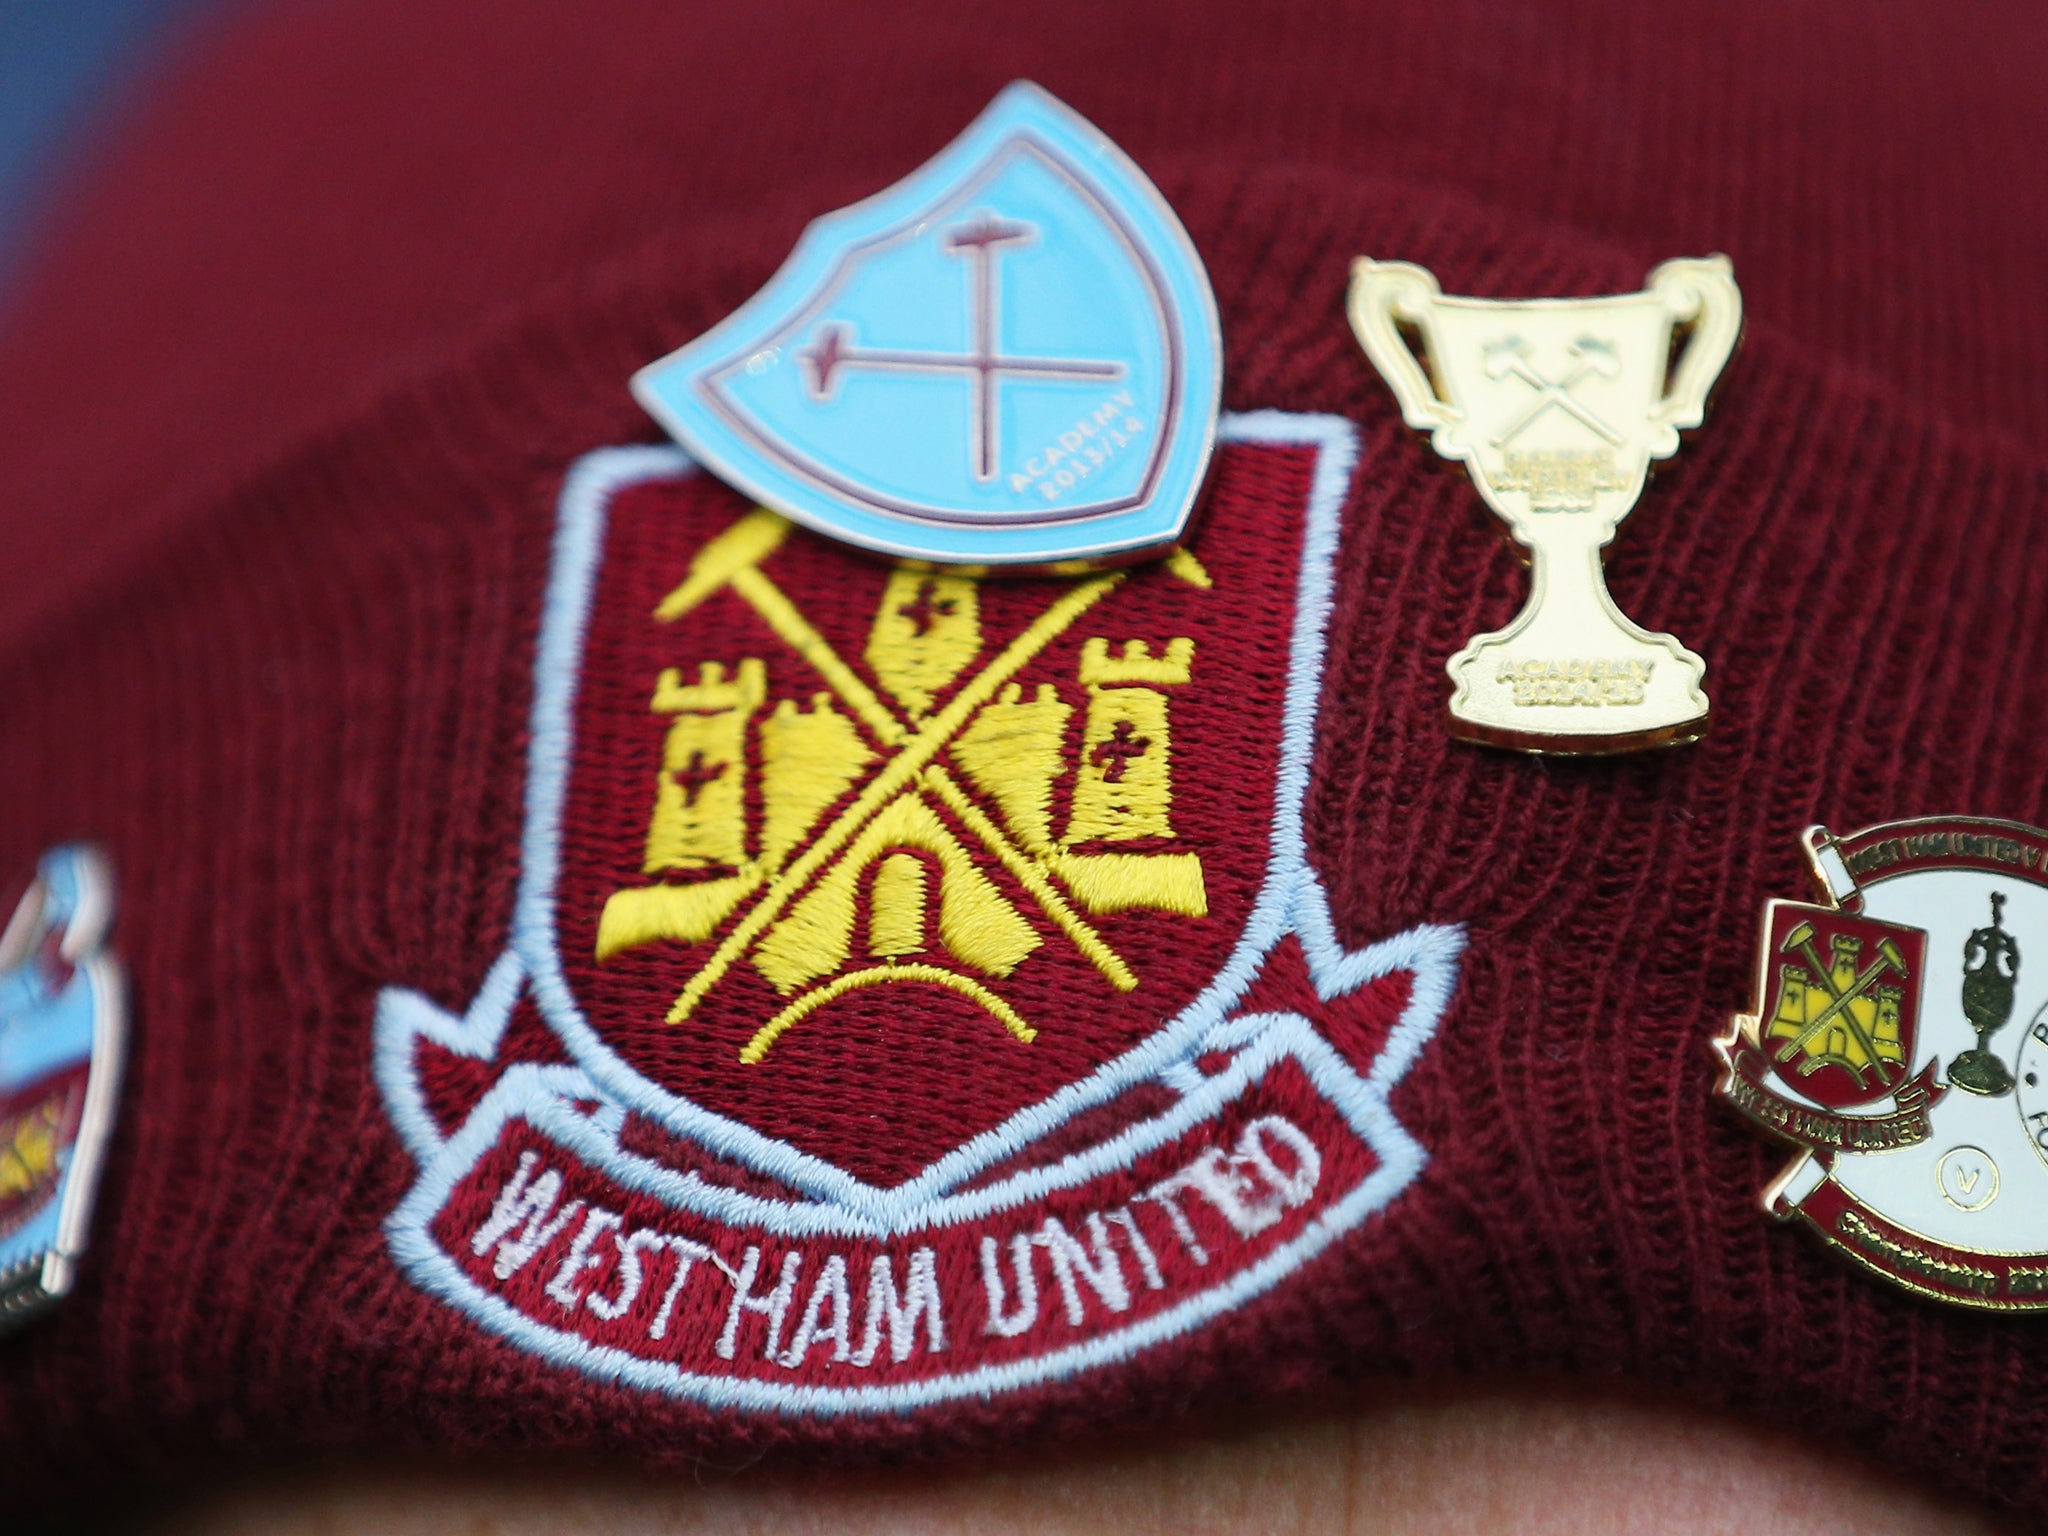 The crest of West Ham United